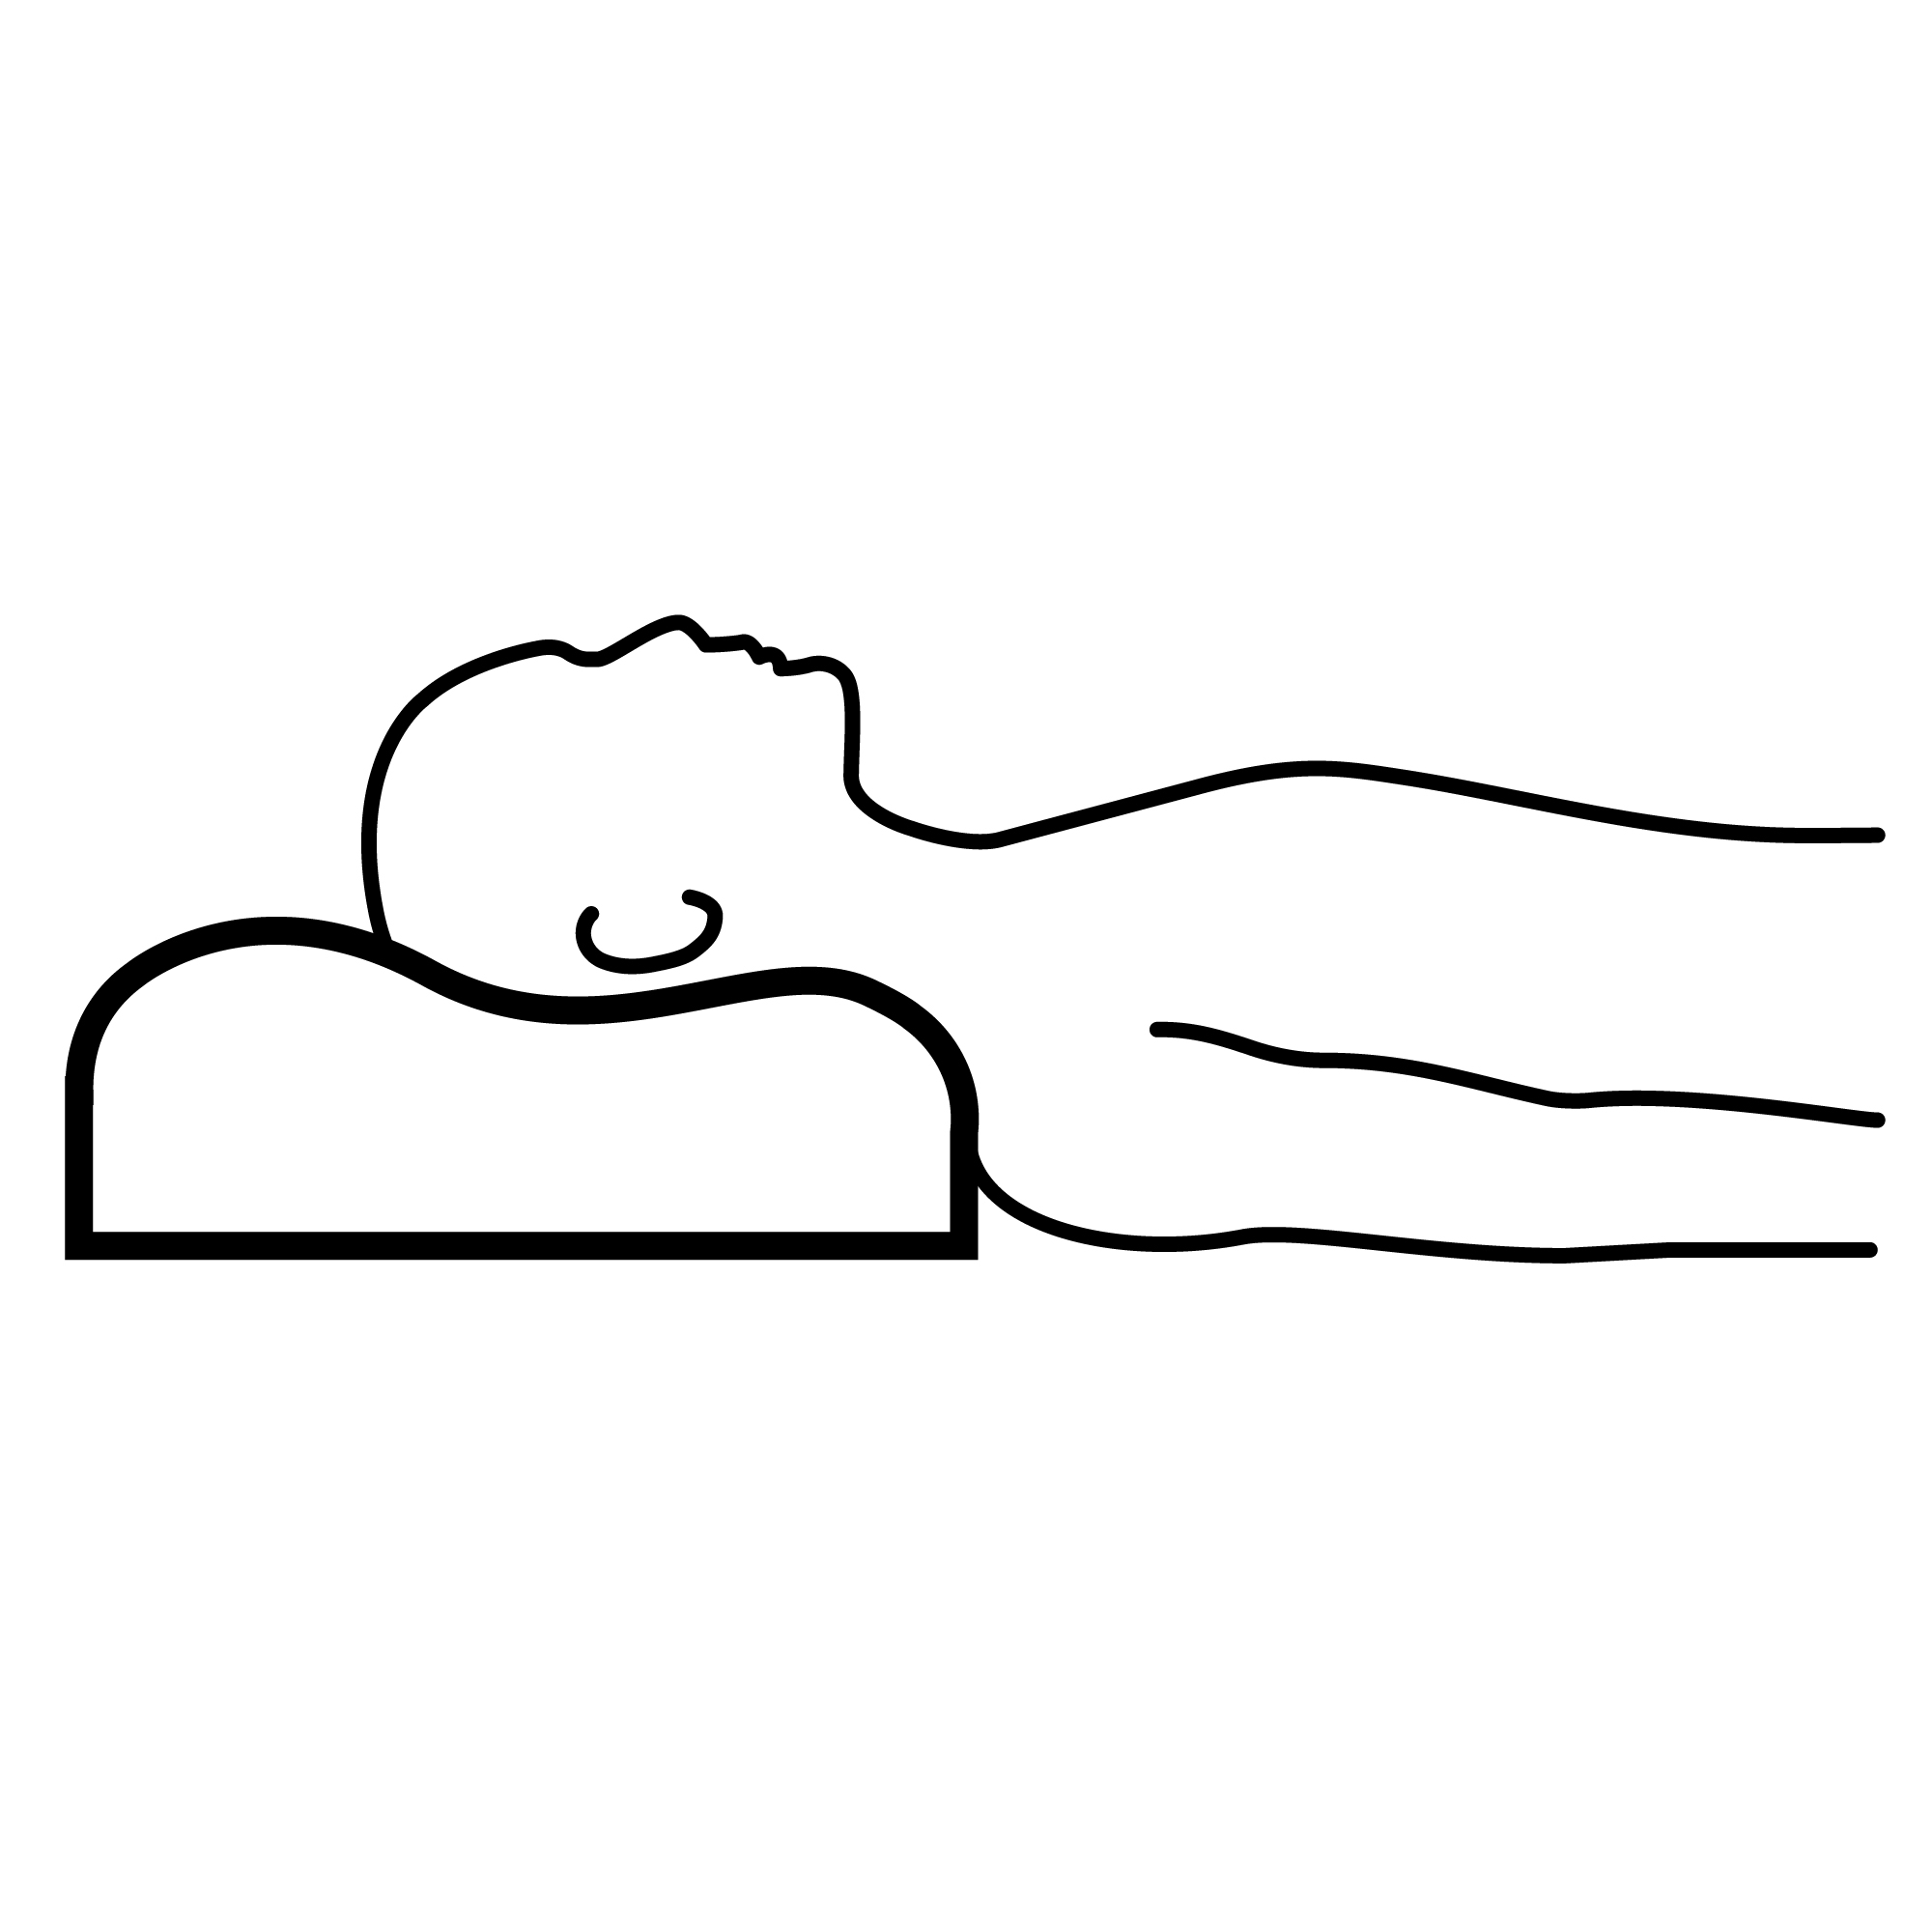 HAGTORNSFLY ergonomic pillow, side/back sleeper